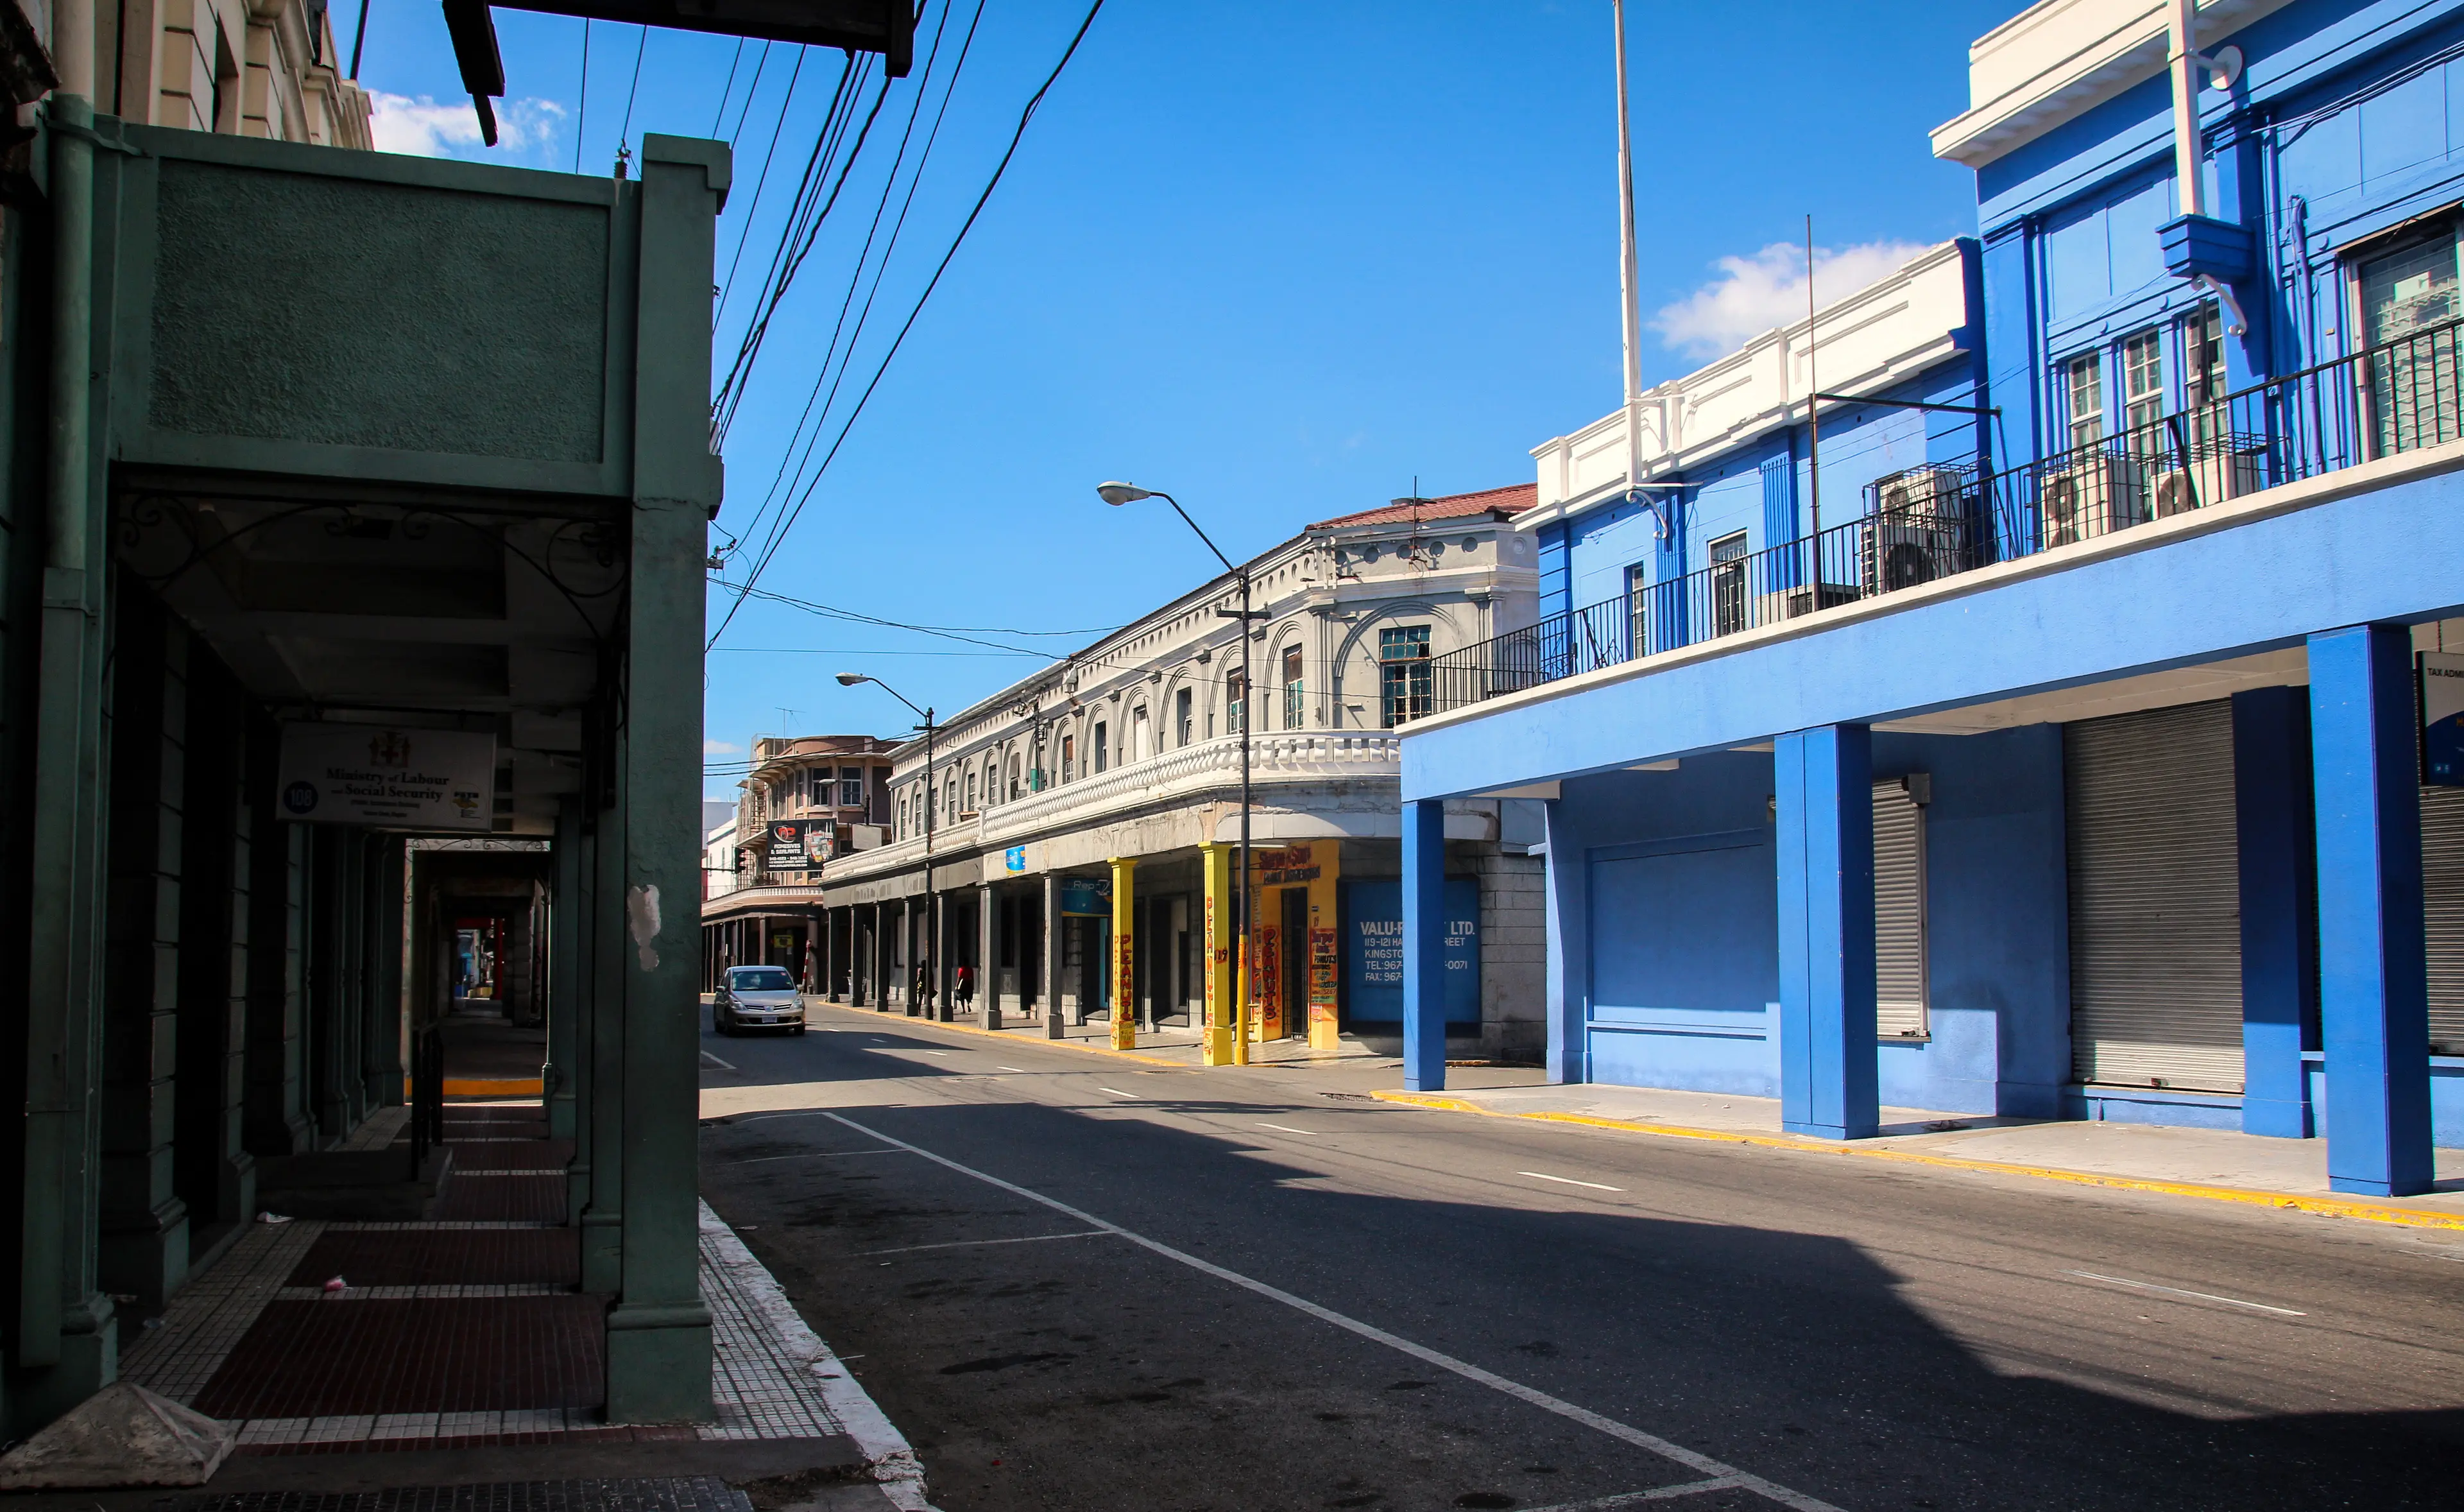 Colorful buildings at quaint city street